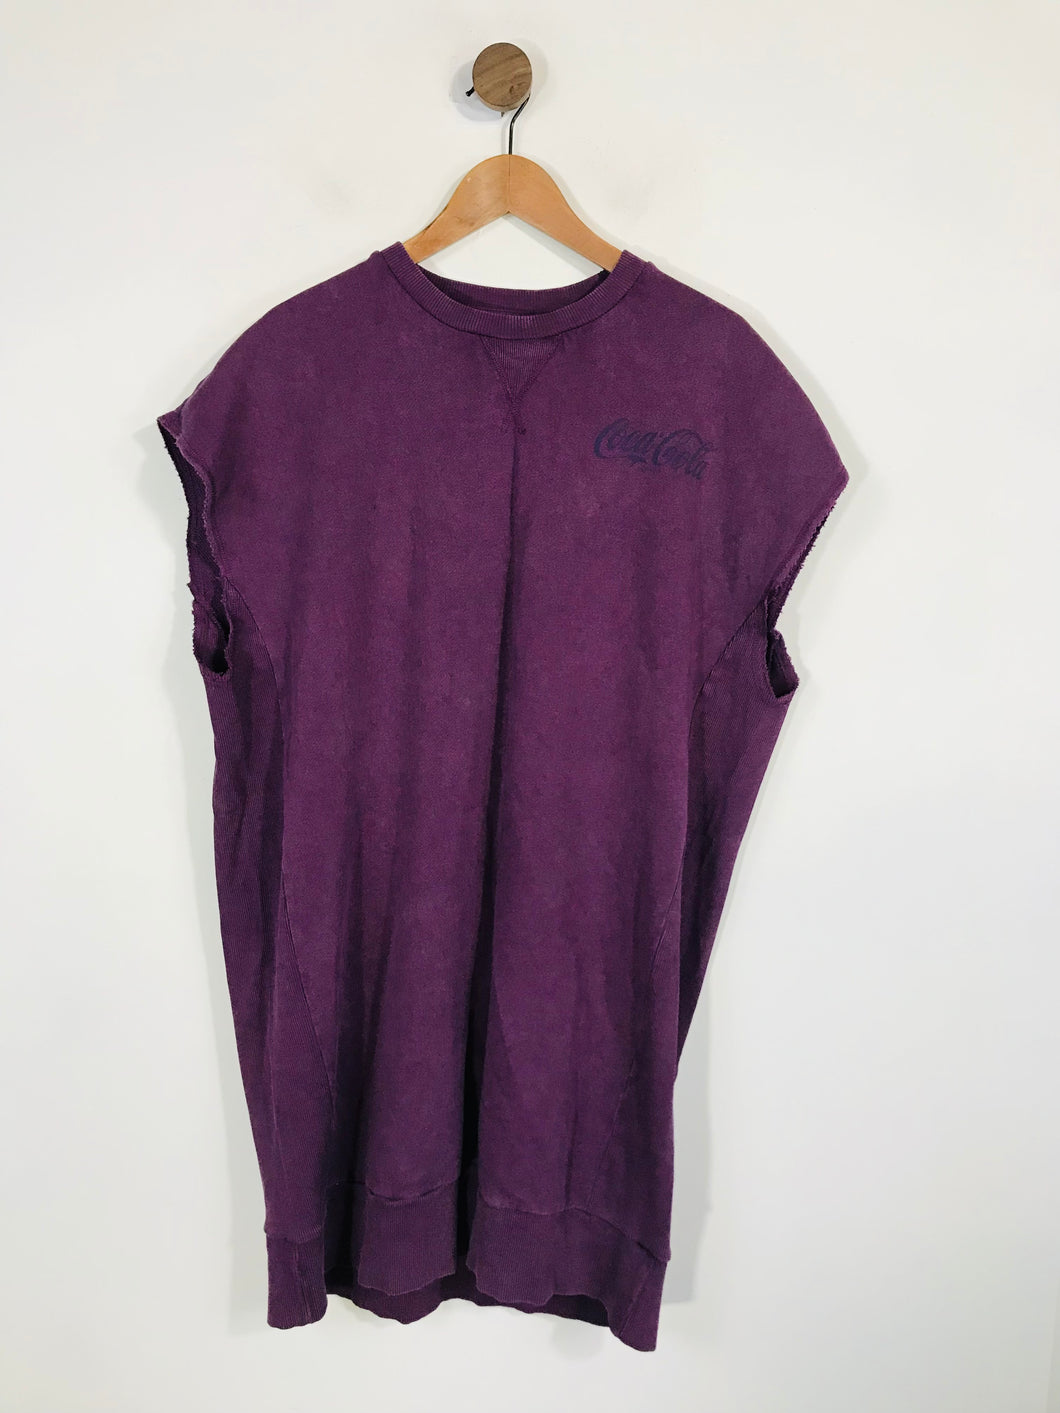 Zara Women's Coca Cola Shirt Dress | M UK10-12 | Purple